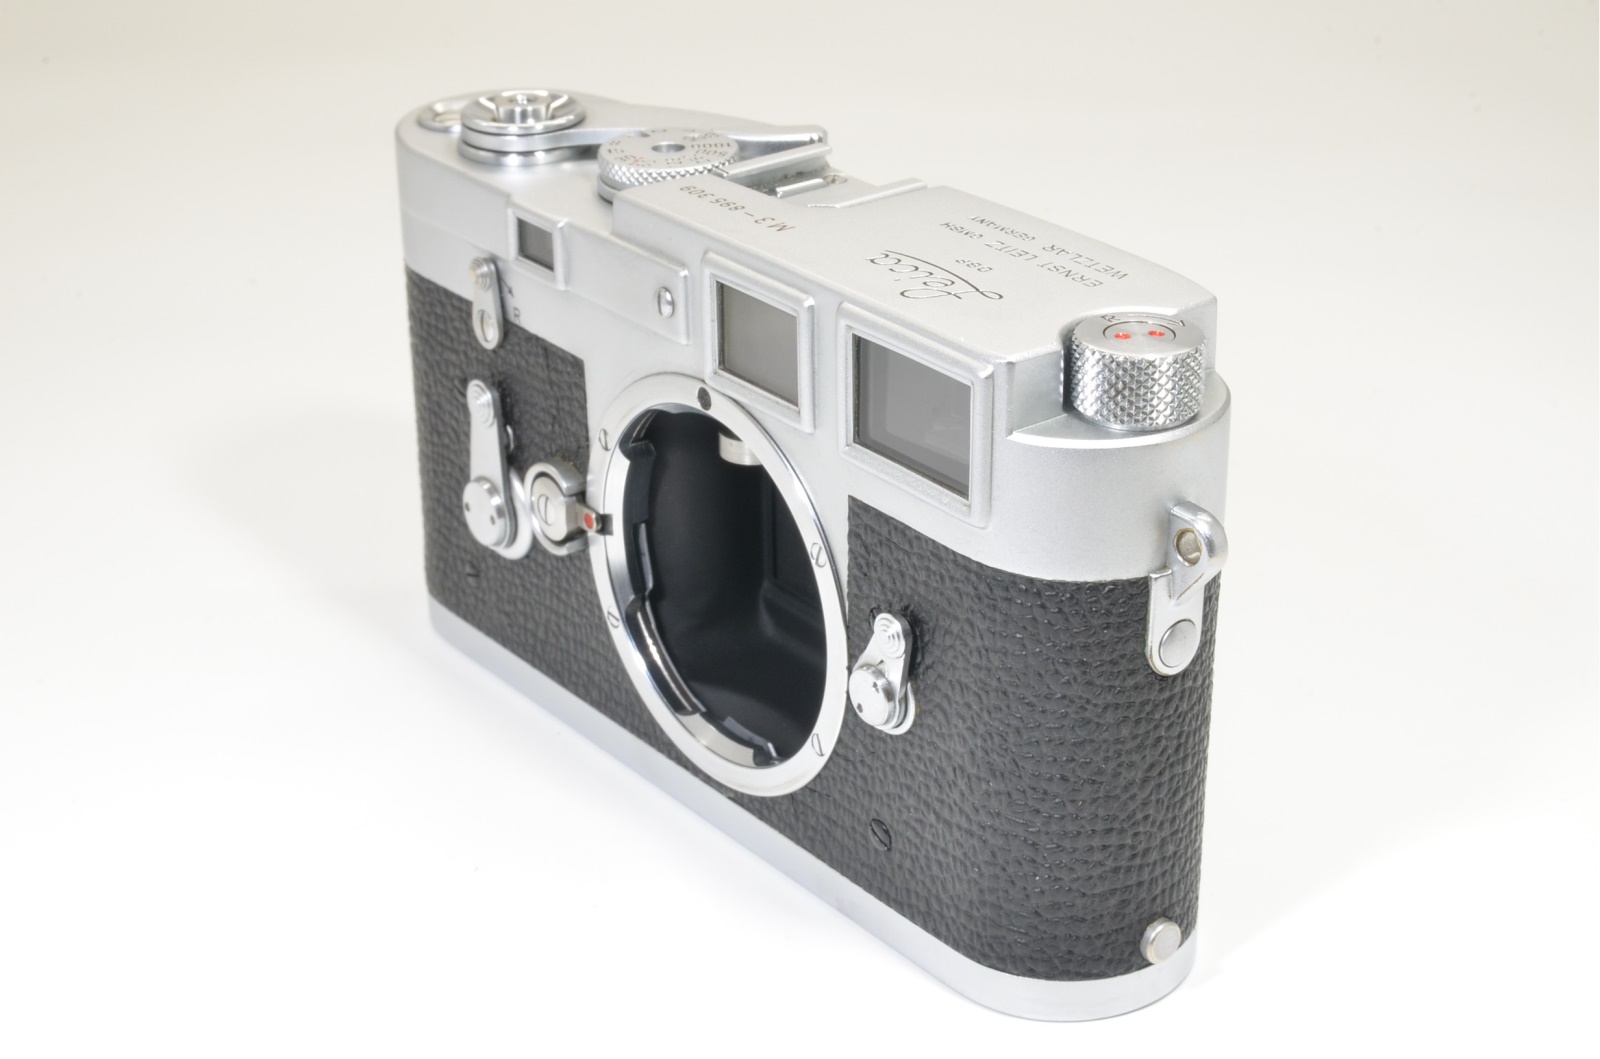 leica m3 single stroke film camera s/n 895309 year 1957 shooting tested